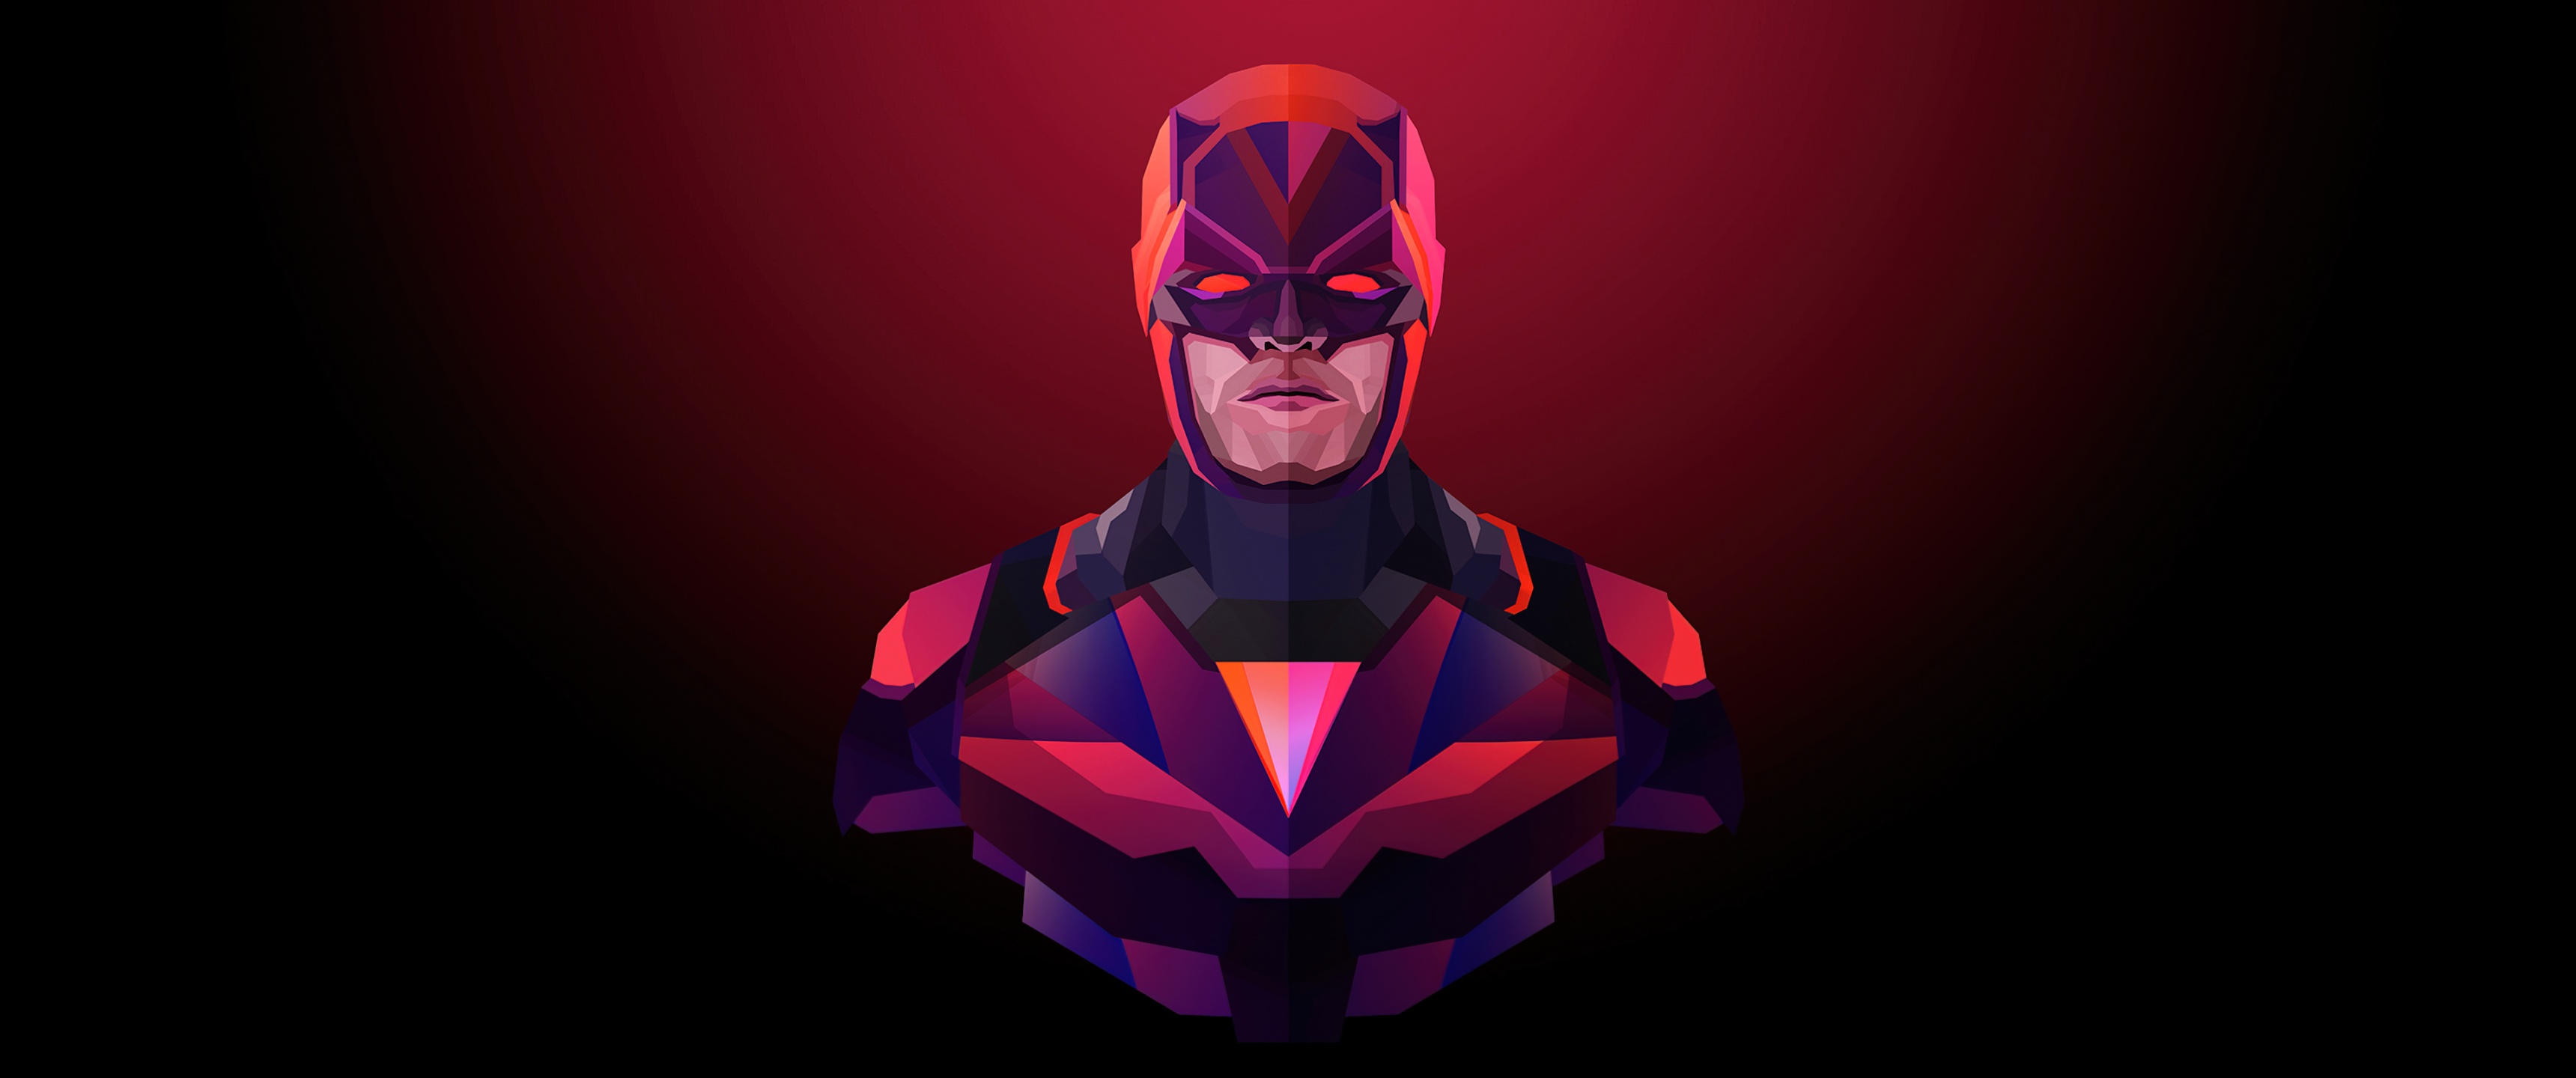 Daredevil Wallpaper 4K, Marvel Superheroes, Dark background, Minimal art, Graphics CGI